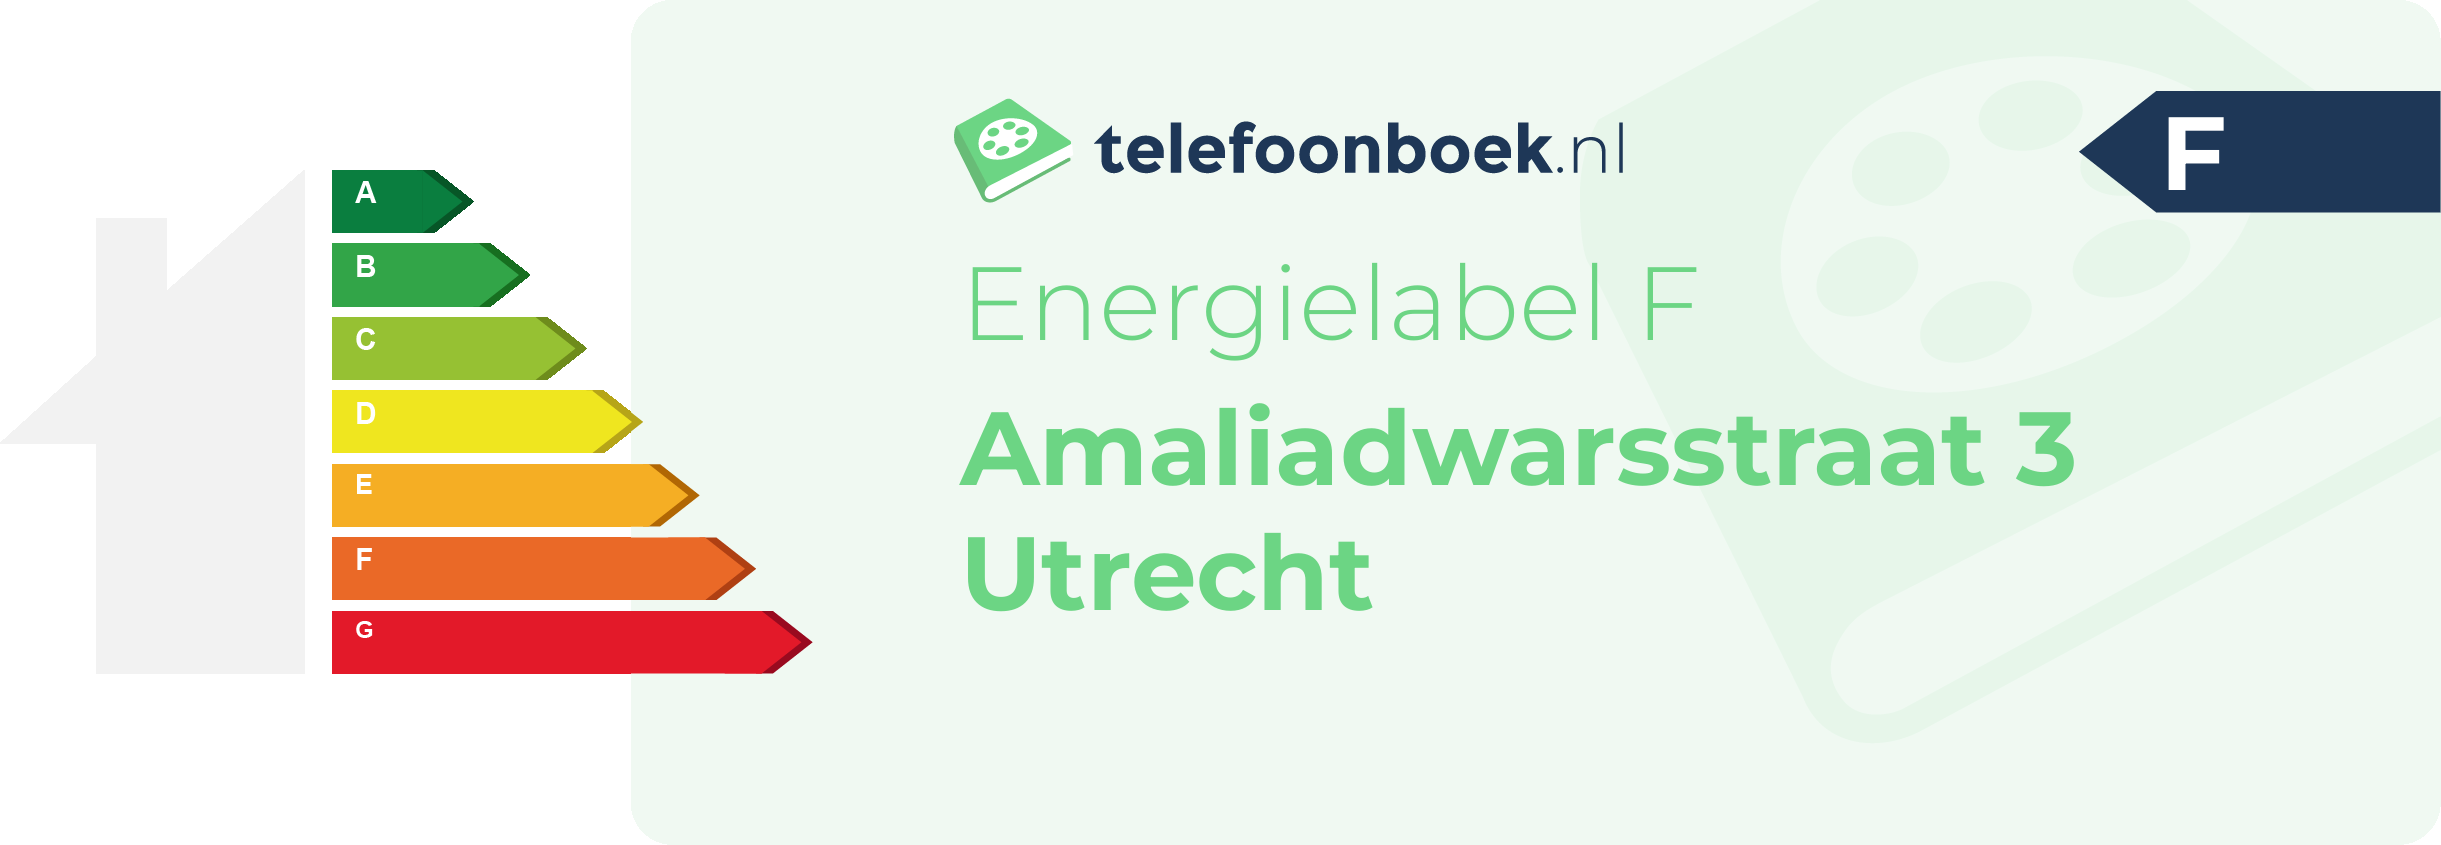 Energielabel Amaliadwarsstraat 3 Utrecht